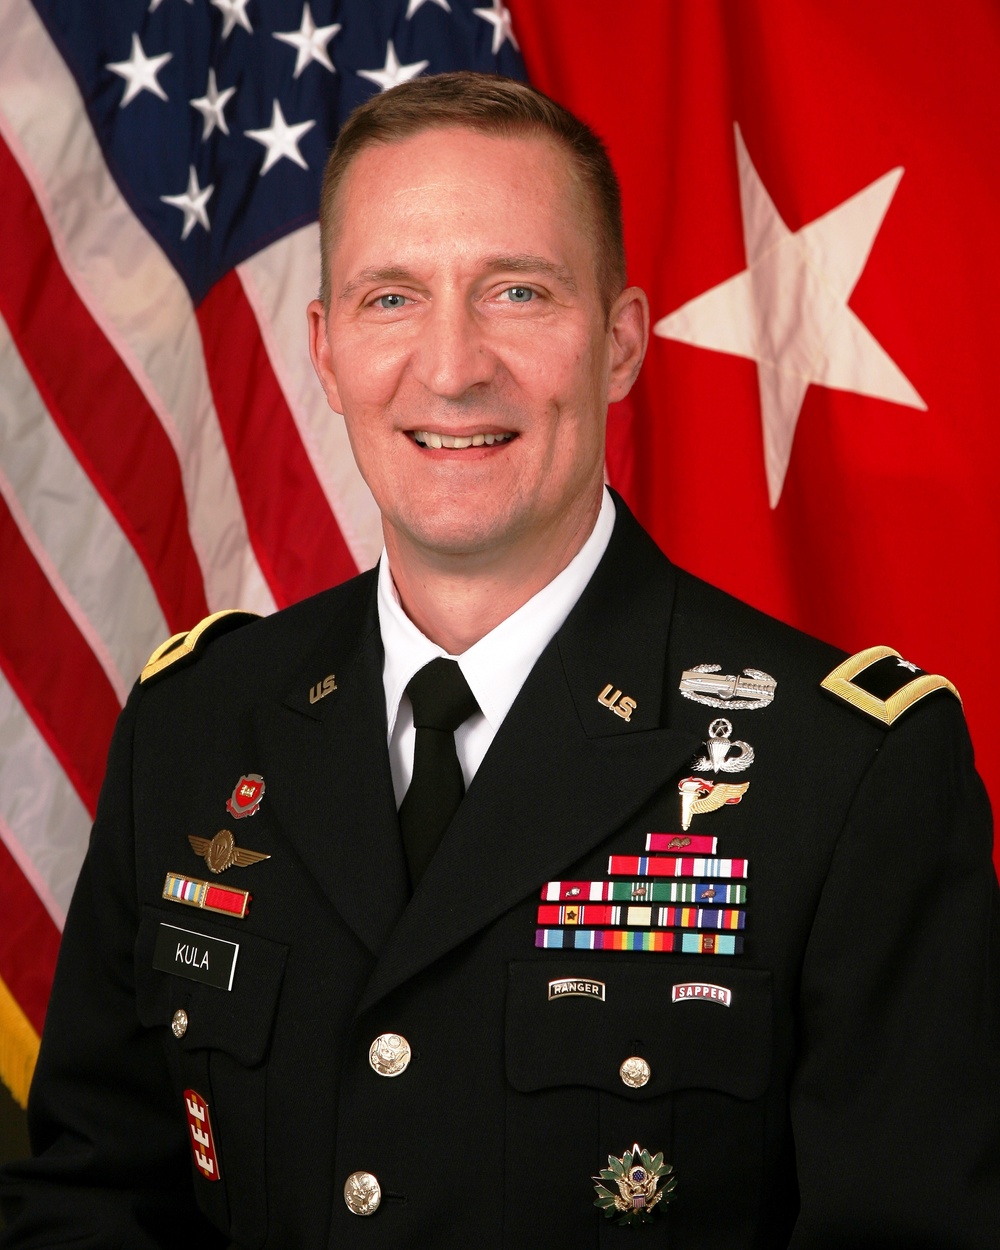 Brig. Gen. Thomas W. Kula